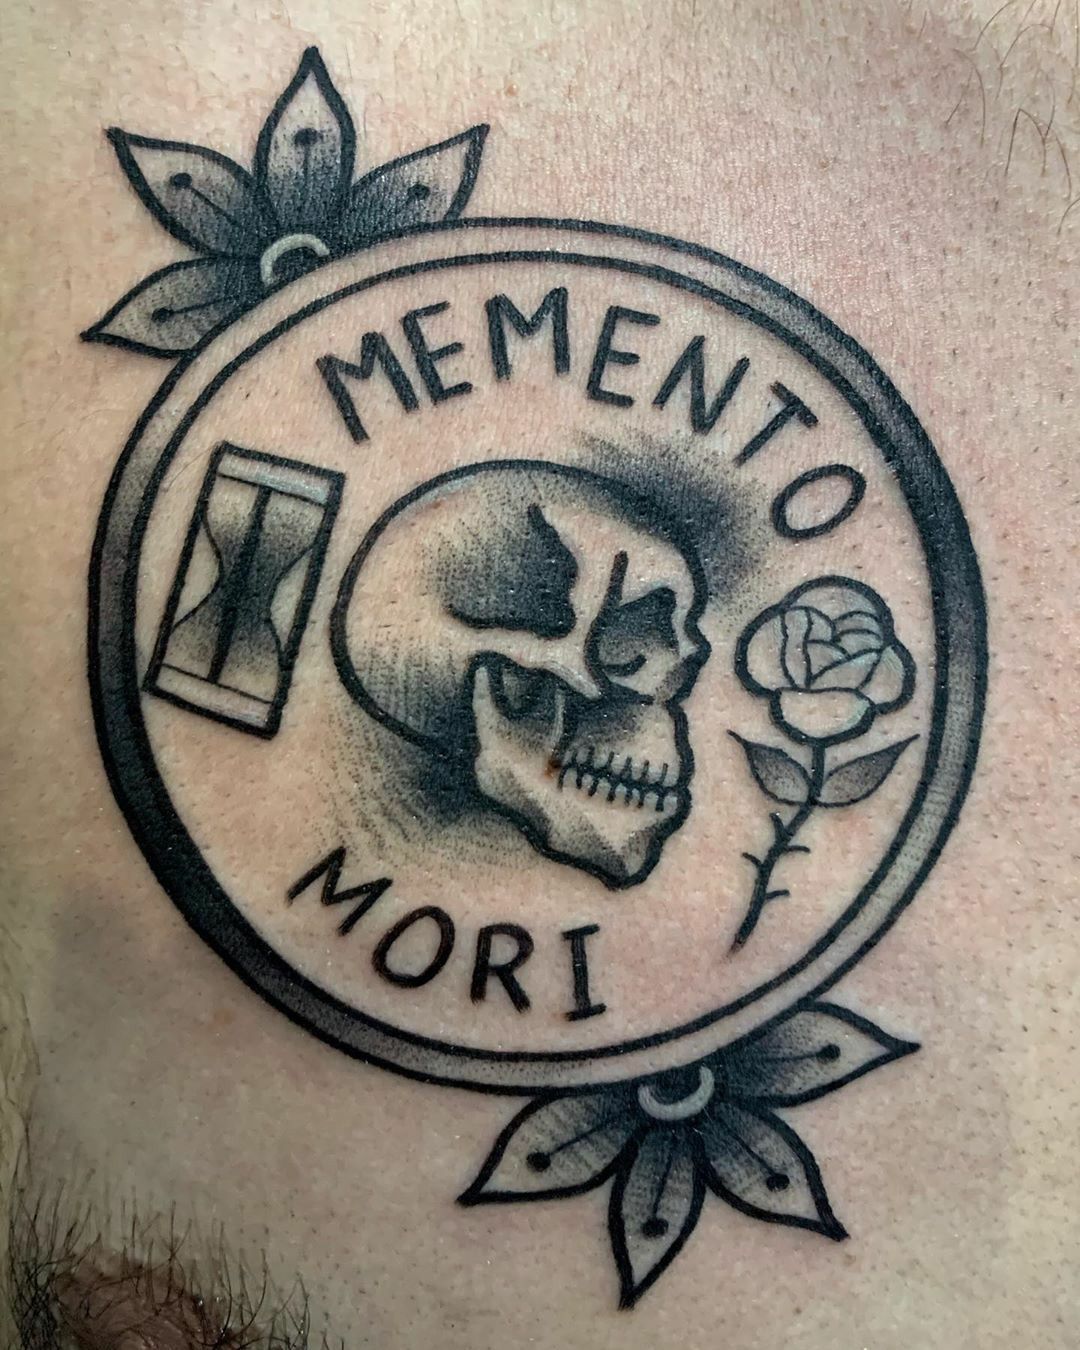 Detalles más de 69 carpe diem memento mori tatuaje netgroup edu vn